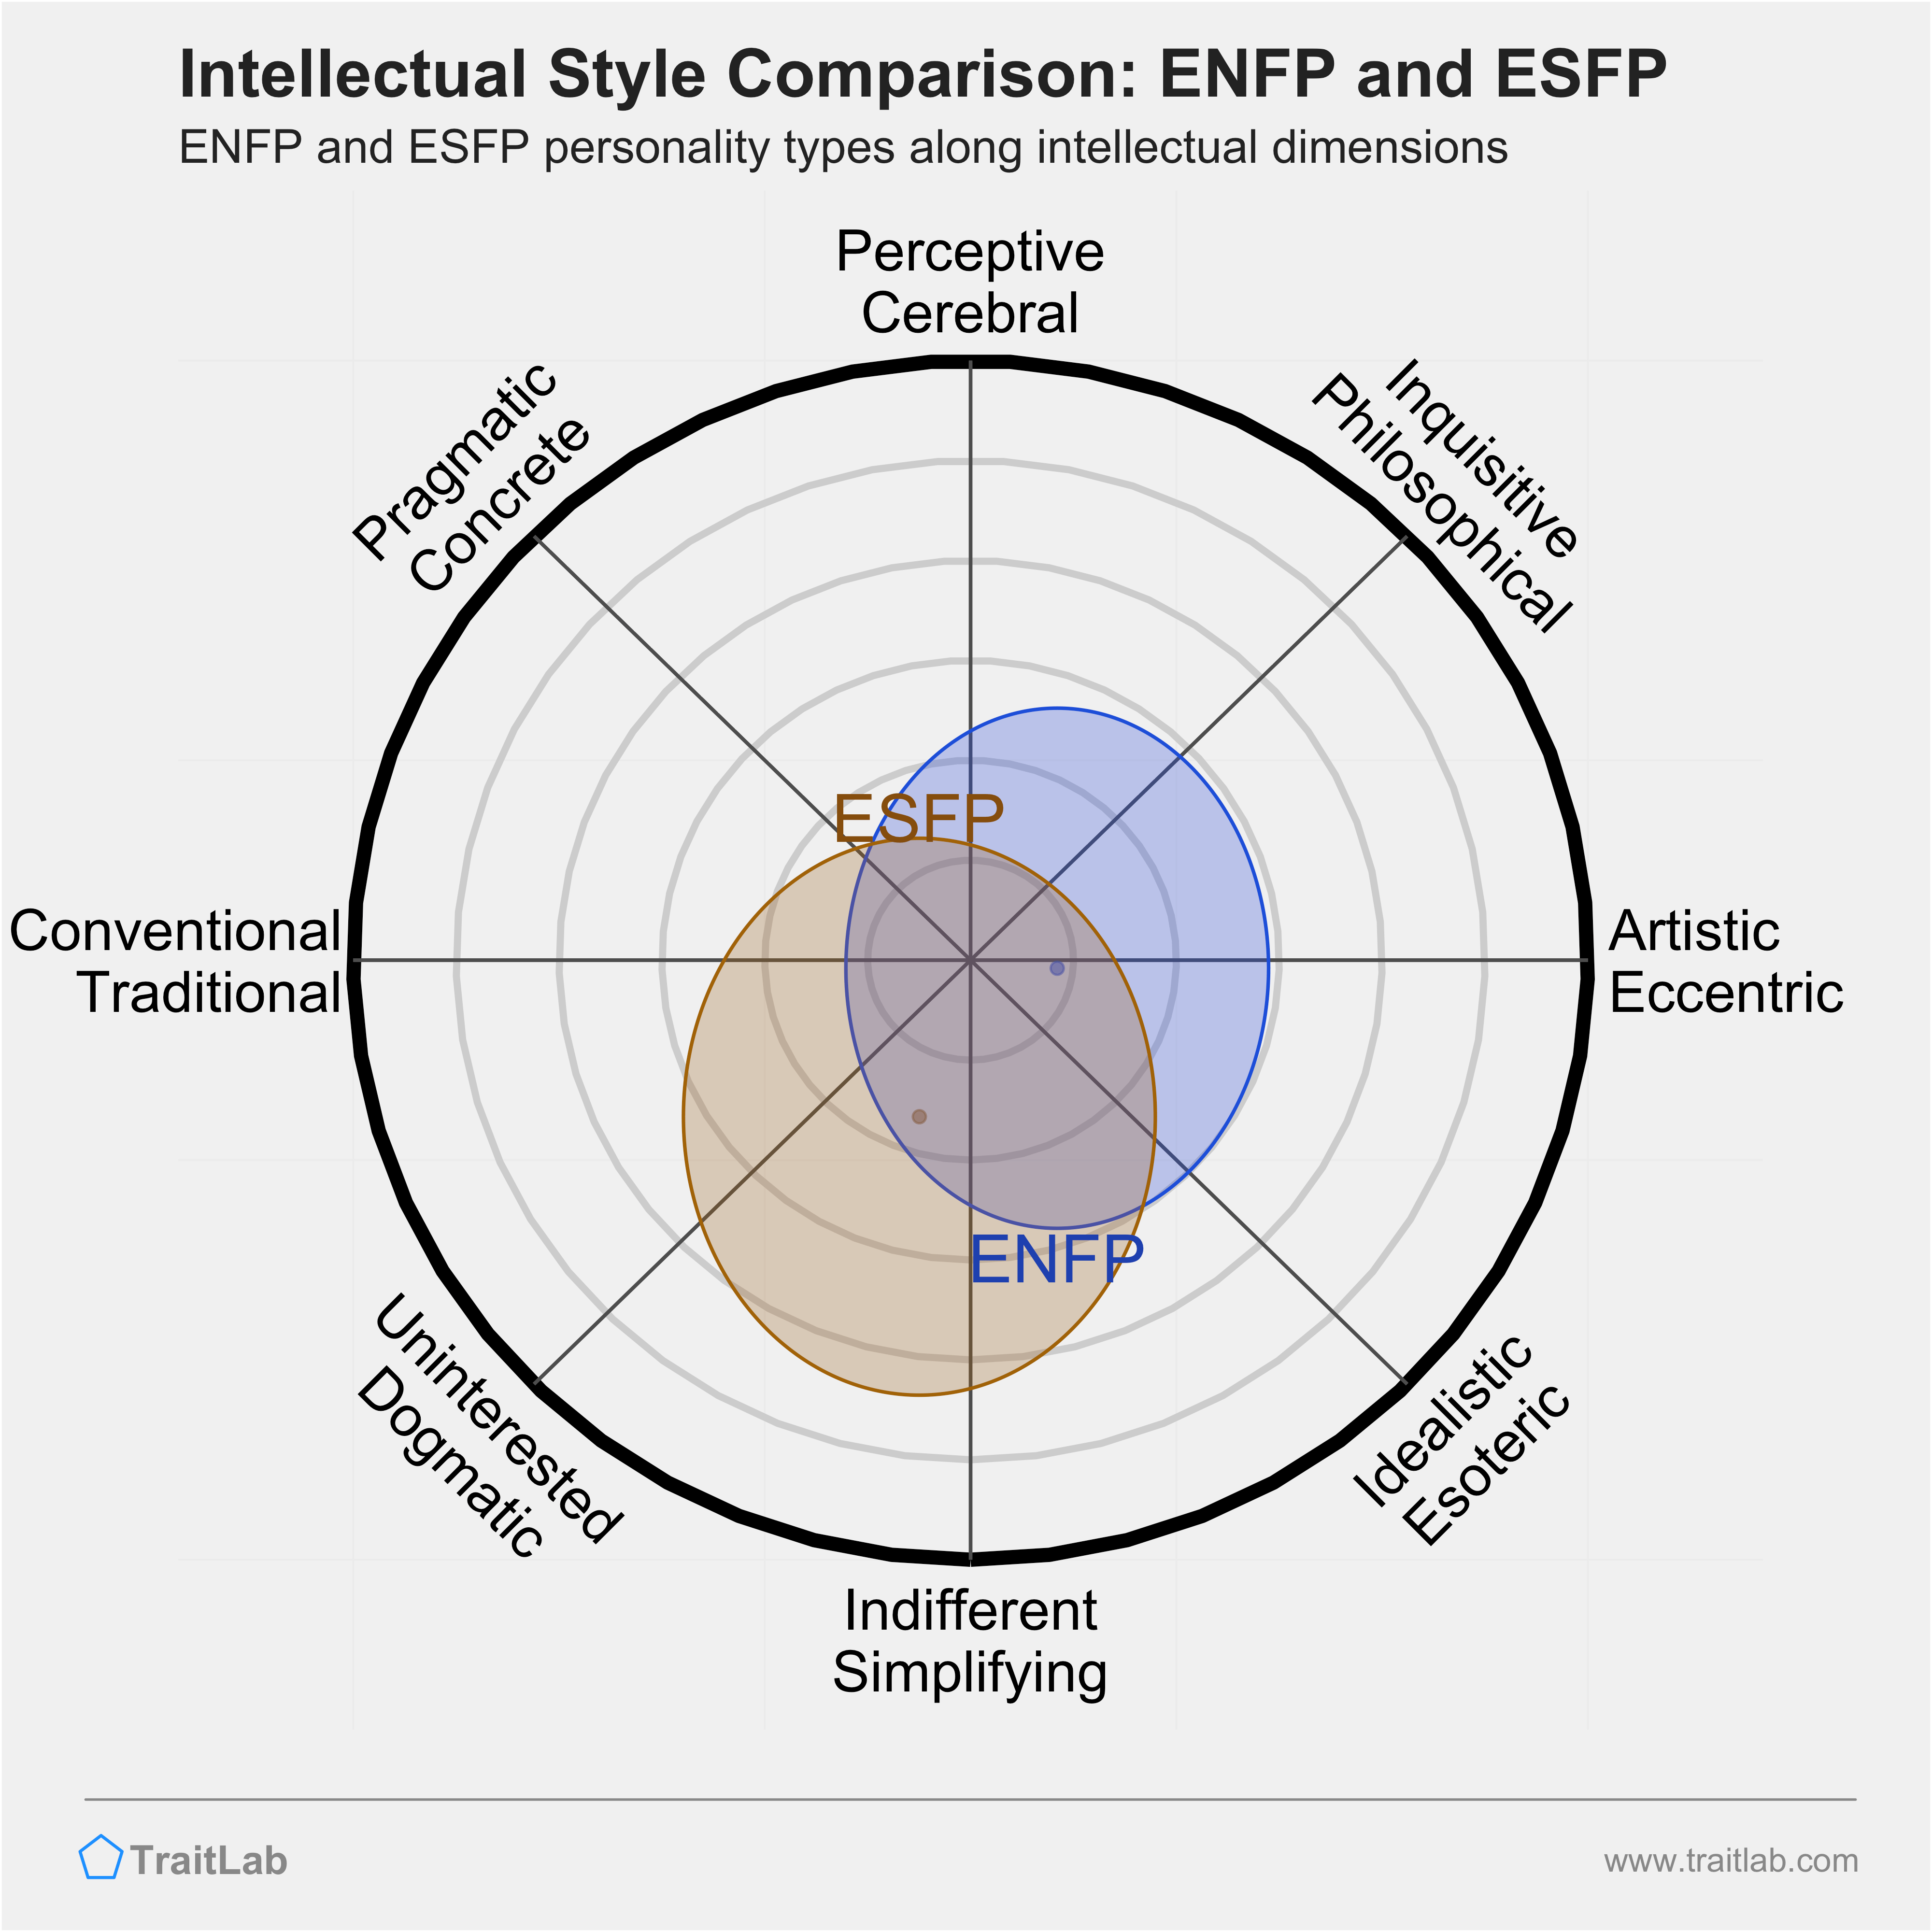 ENFP and ESFP comparison across intellectual dimensions